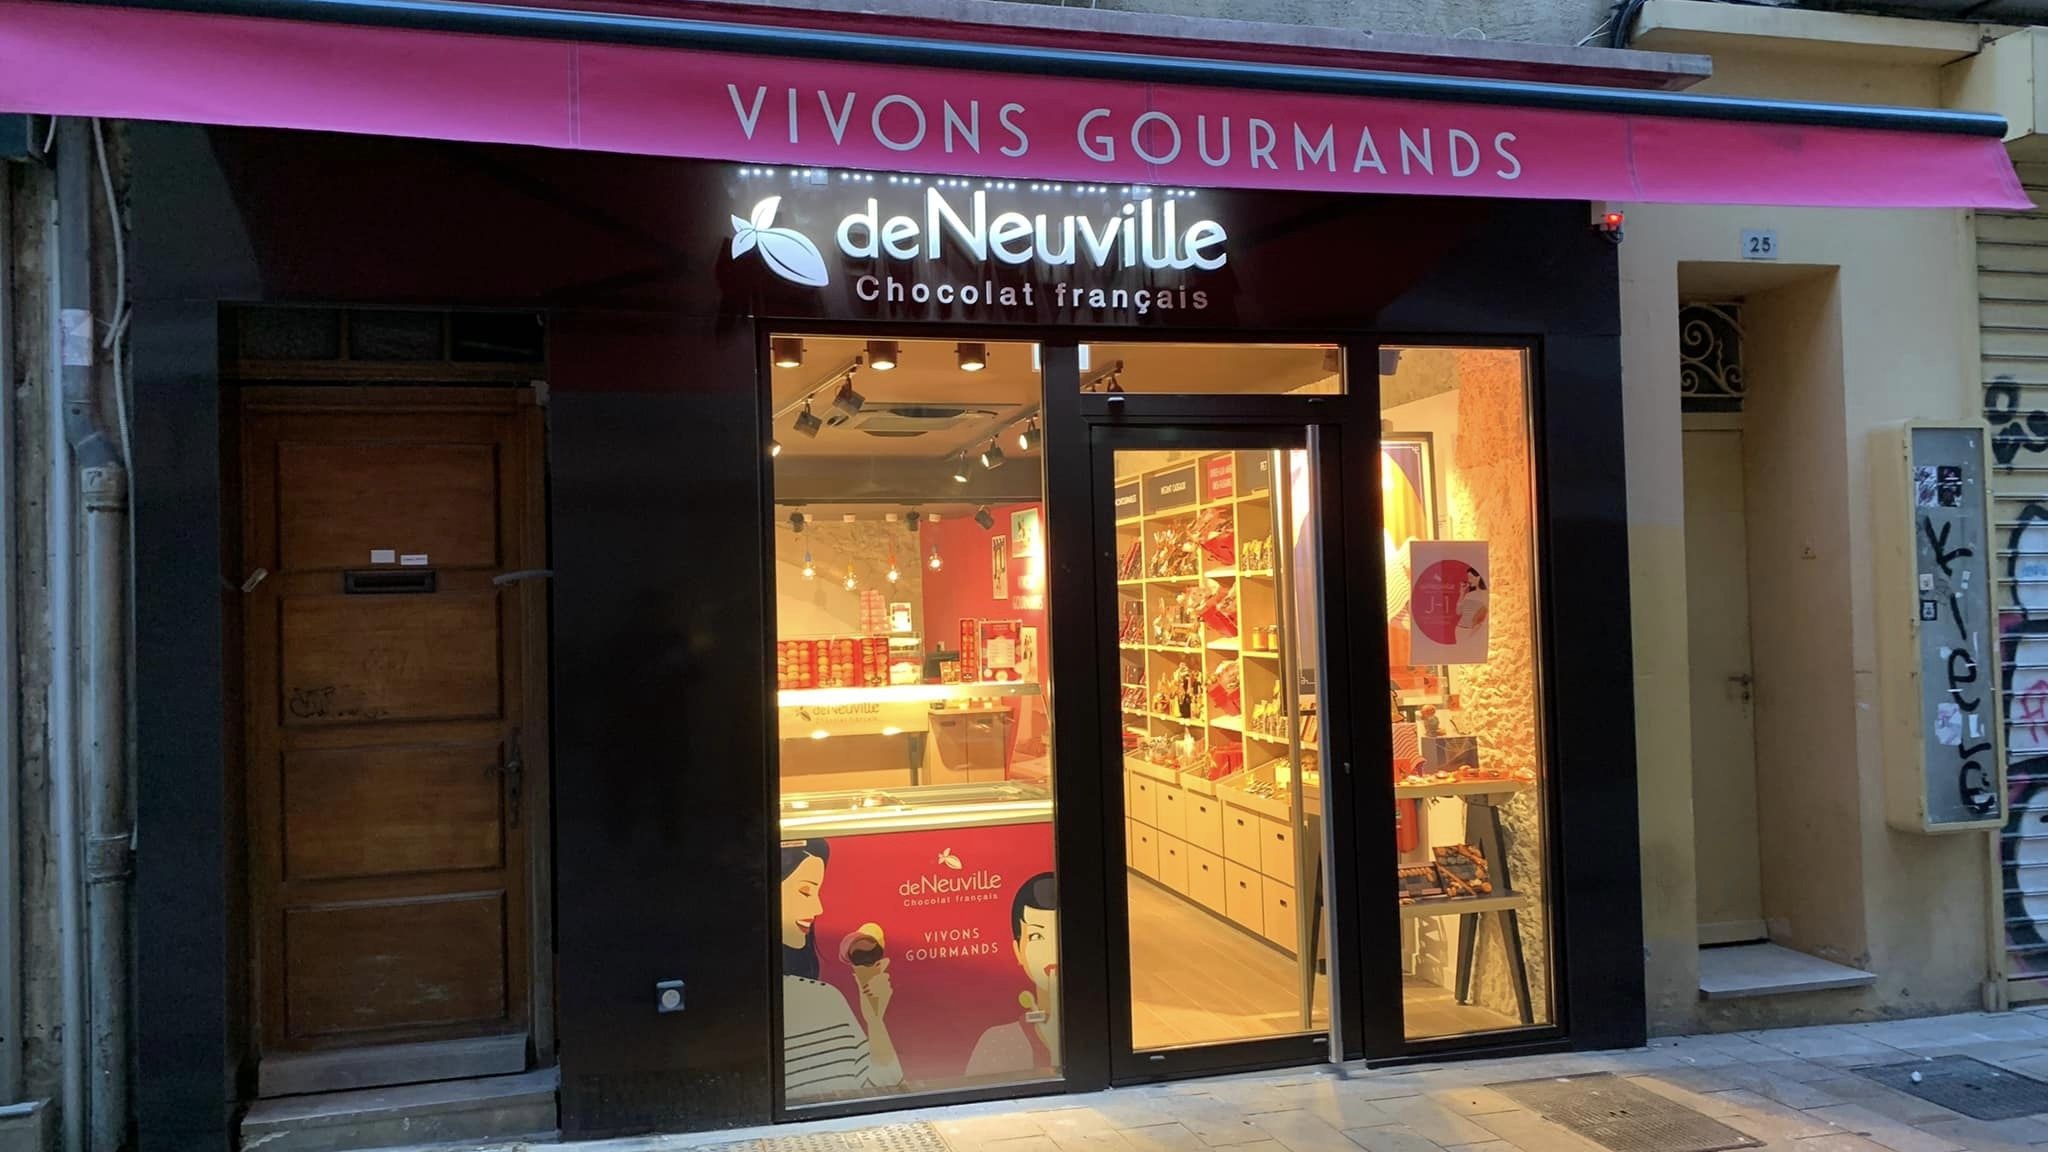 De Neuville Carpentras – Chocolat français